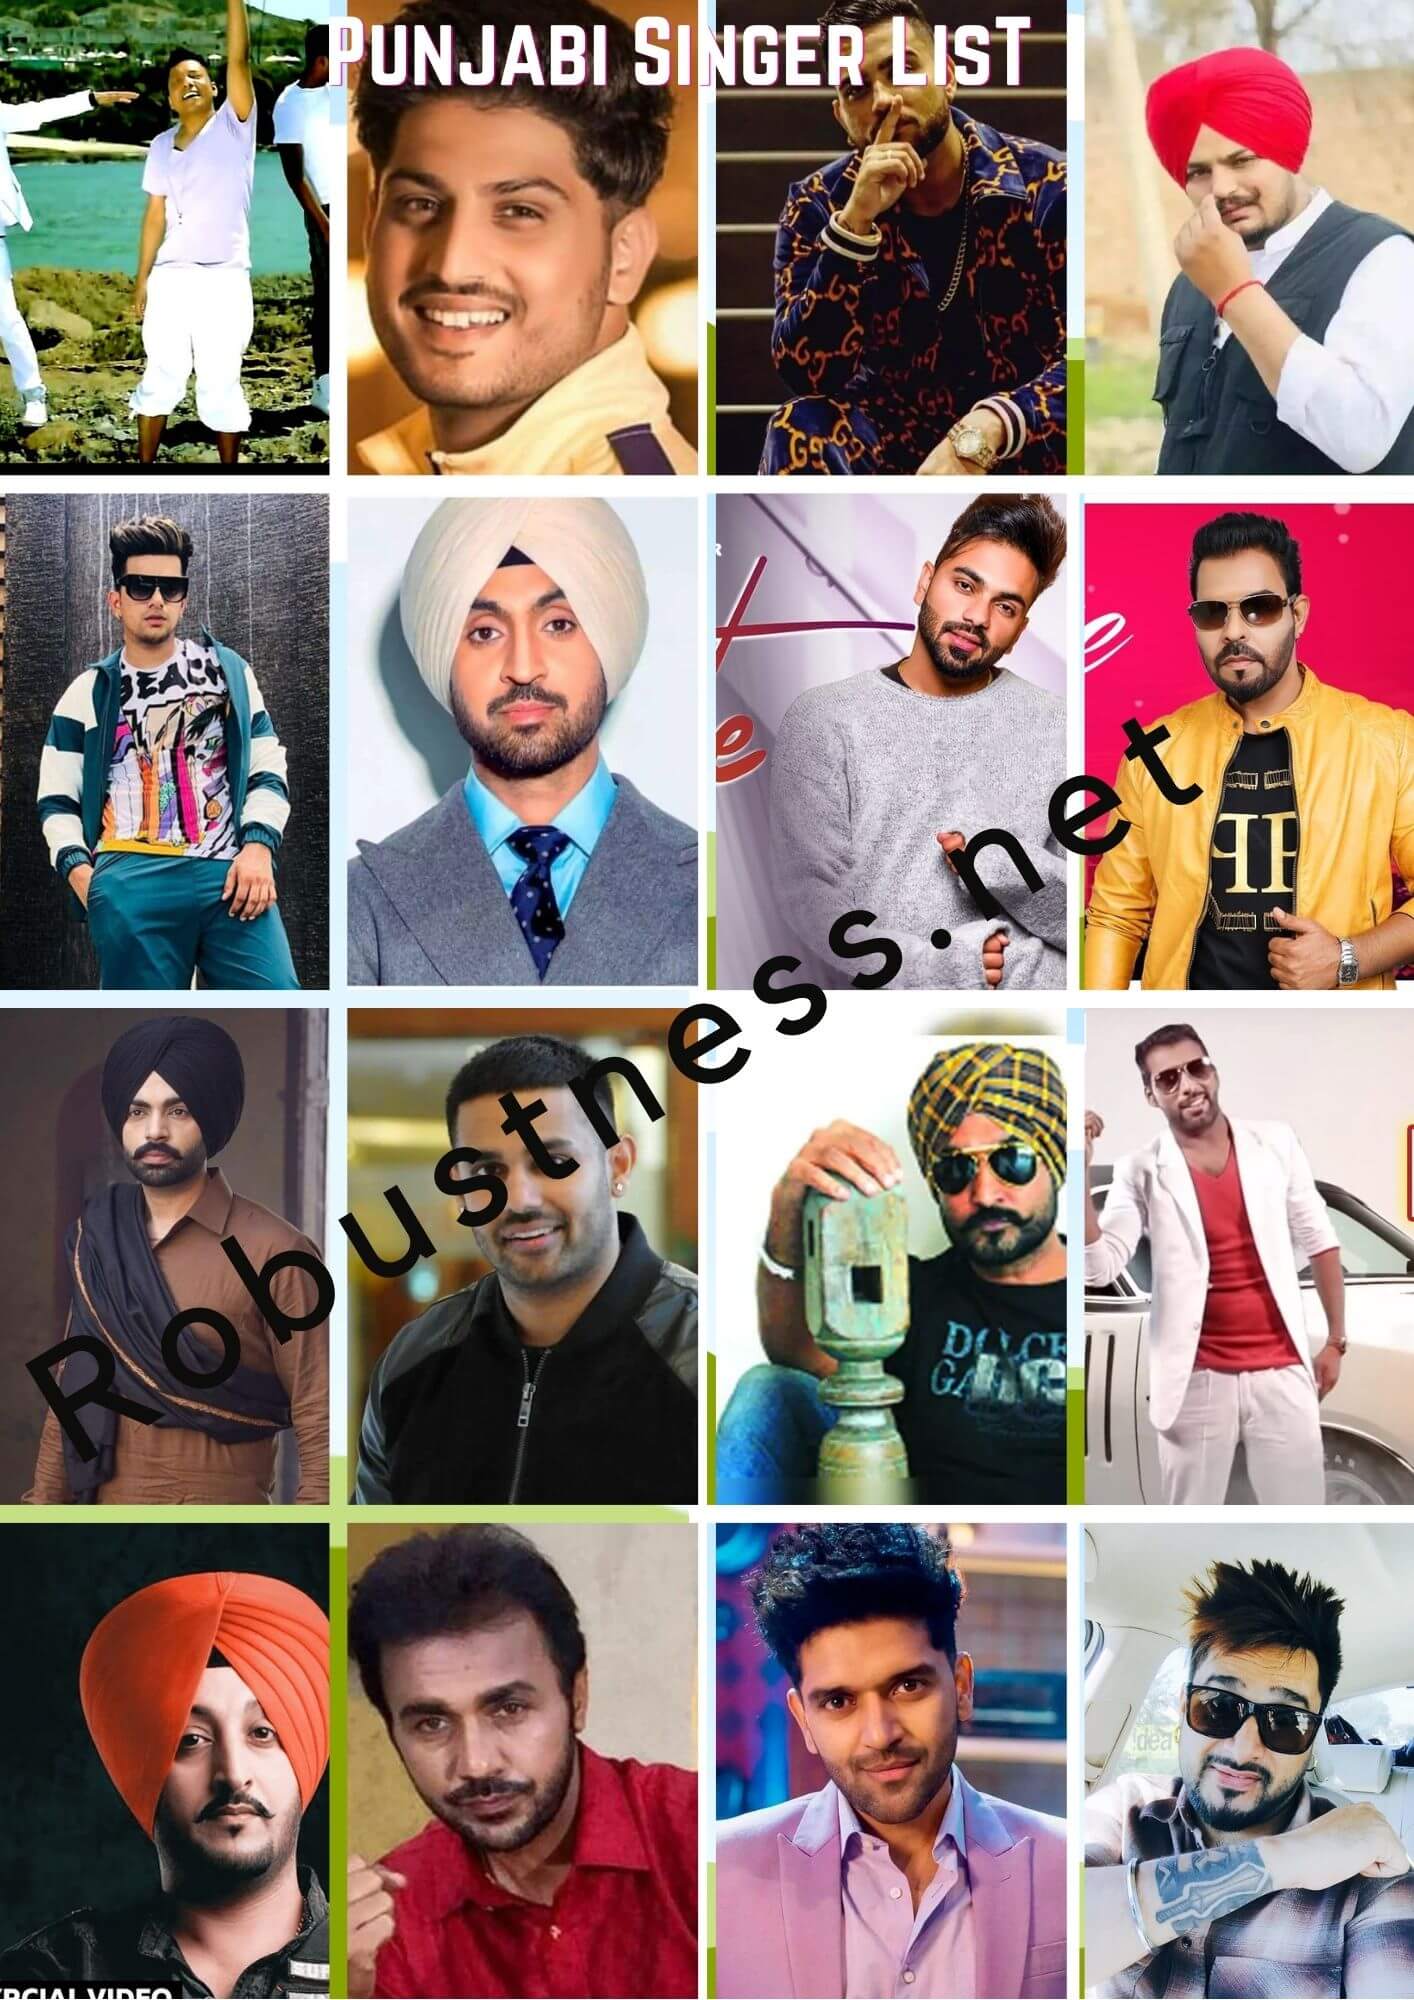 Top Punjabi Singer List | 55+ Famous Punjabi Singer Details with Image